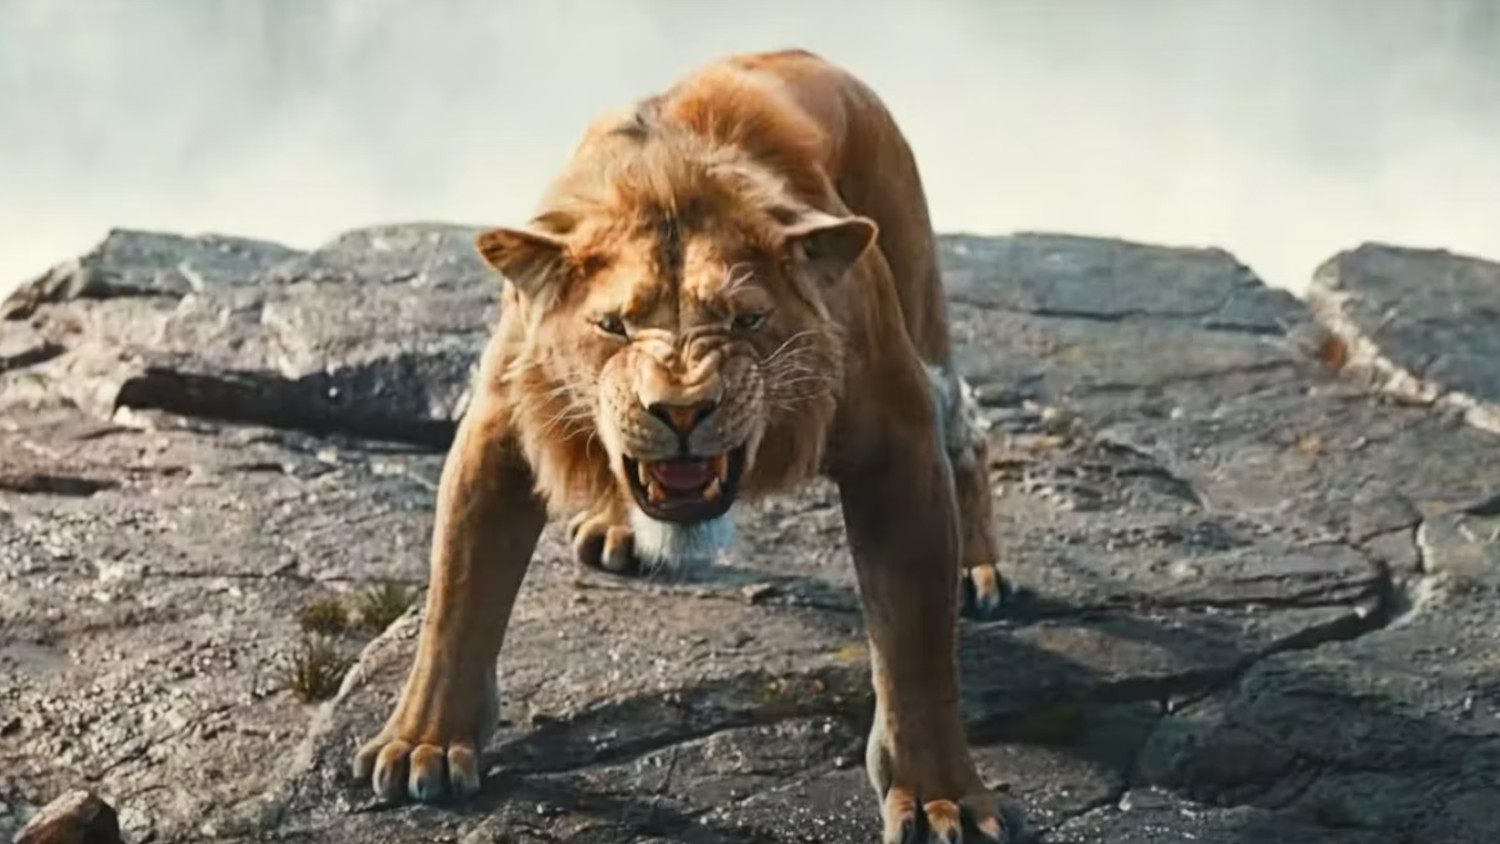 mufasa lion king director barry jenkins responds backlash